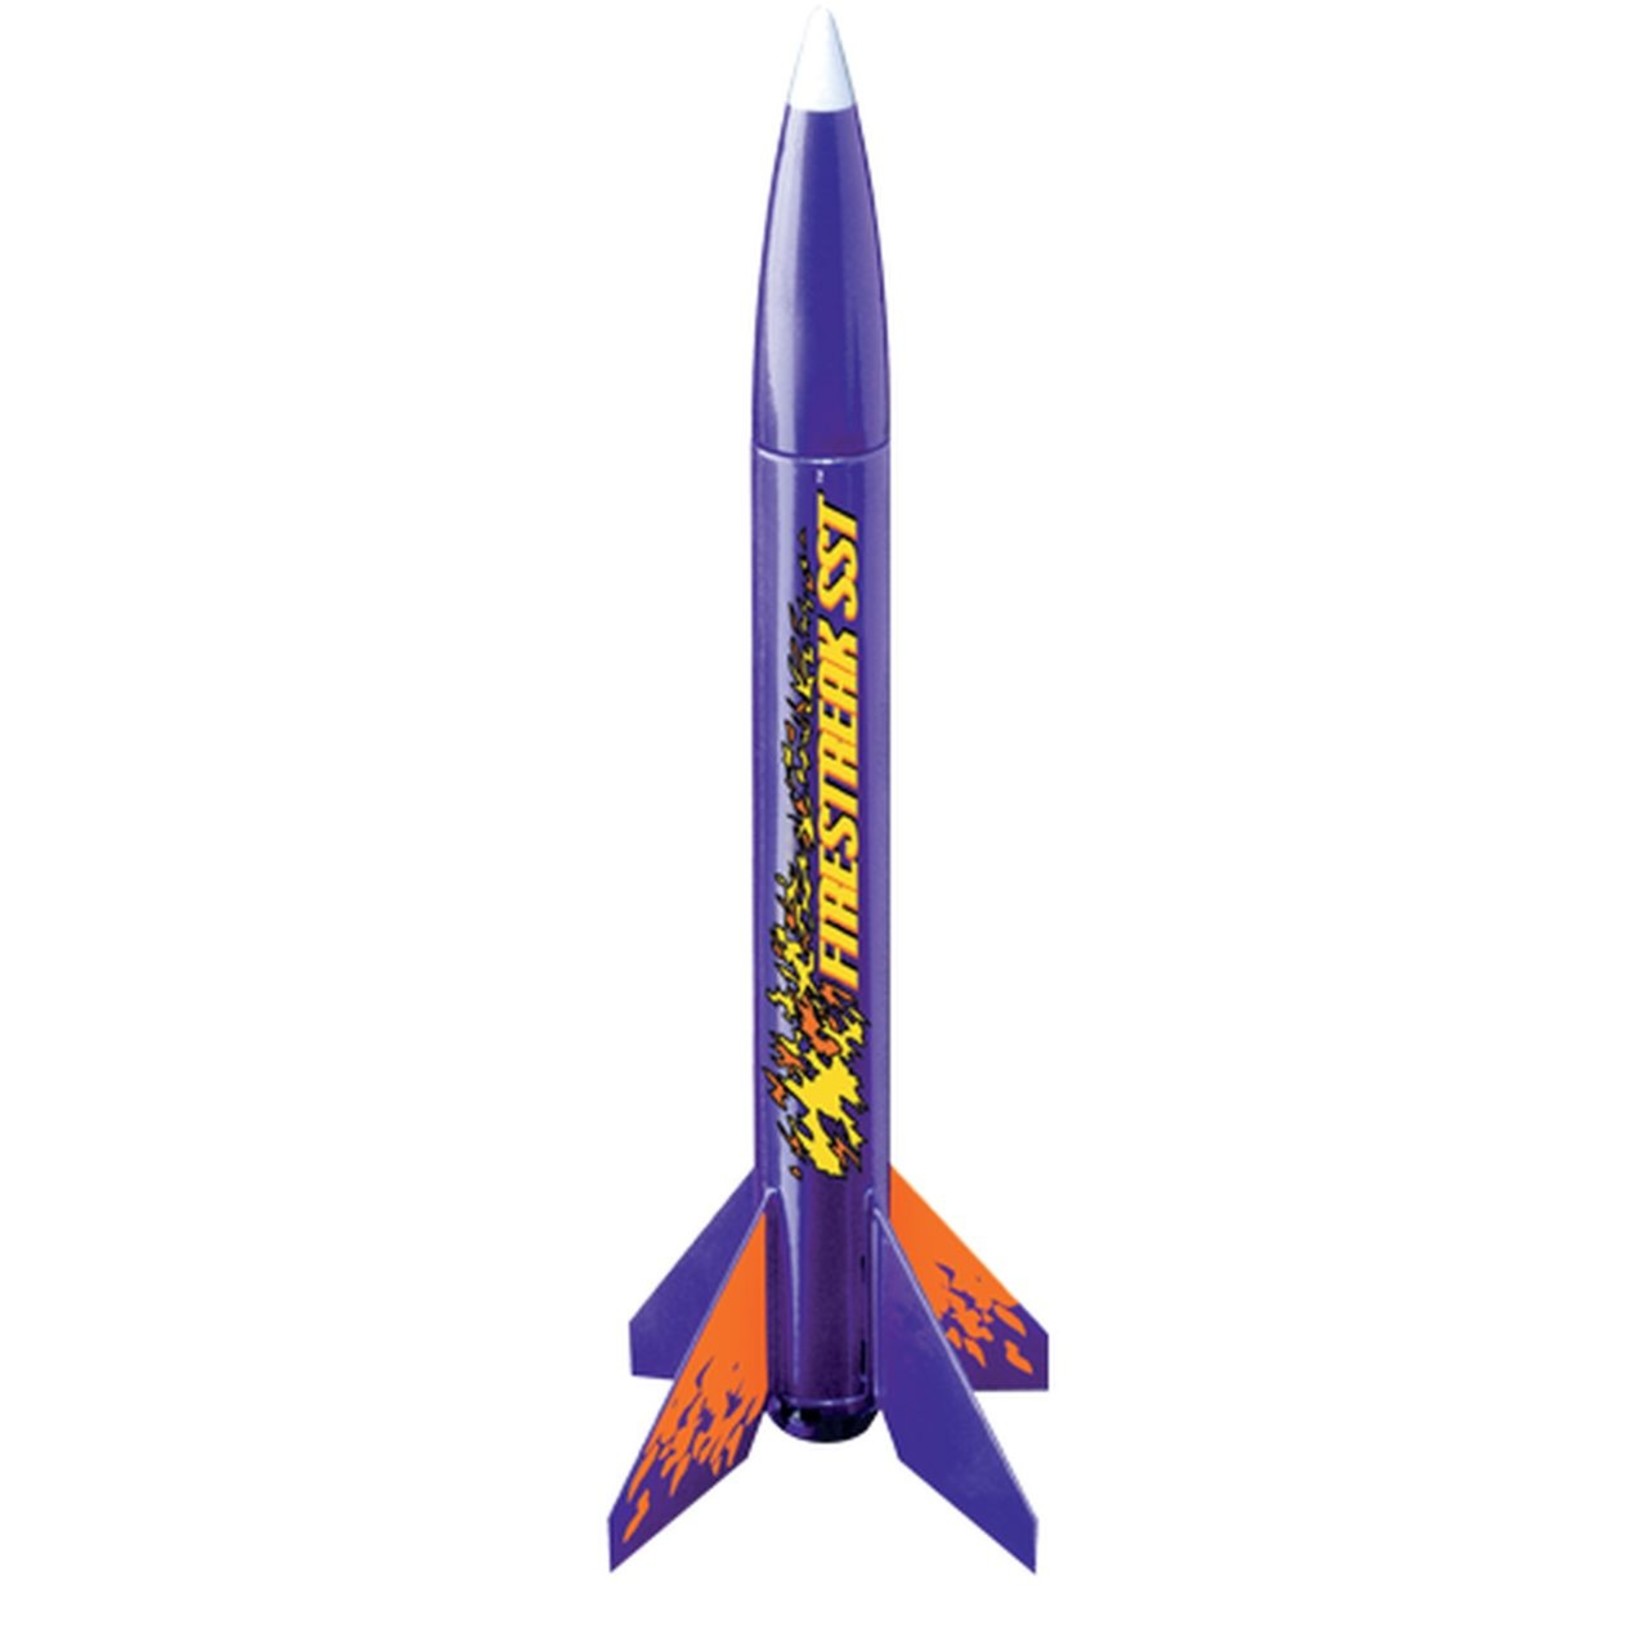 Estes Rockets EST0806  Firestreak SST Simple Snap Together Rocket Kit, E2X